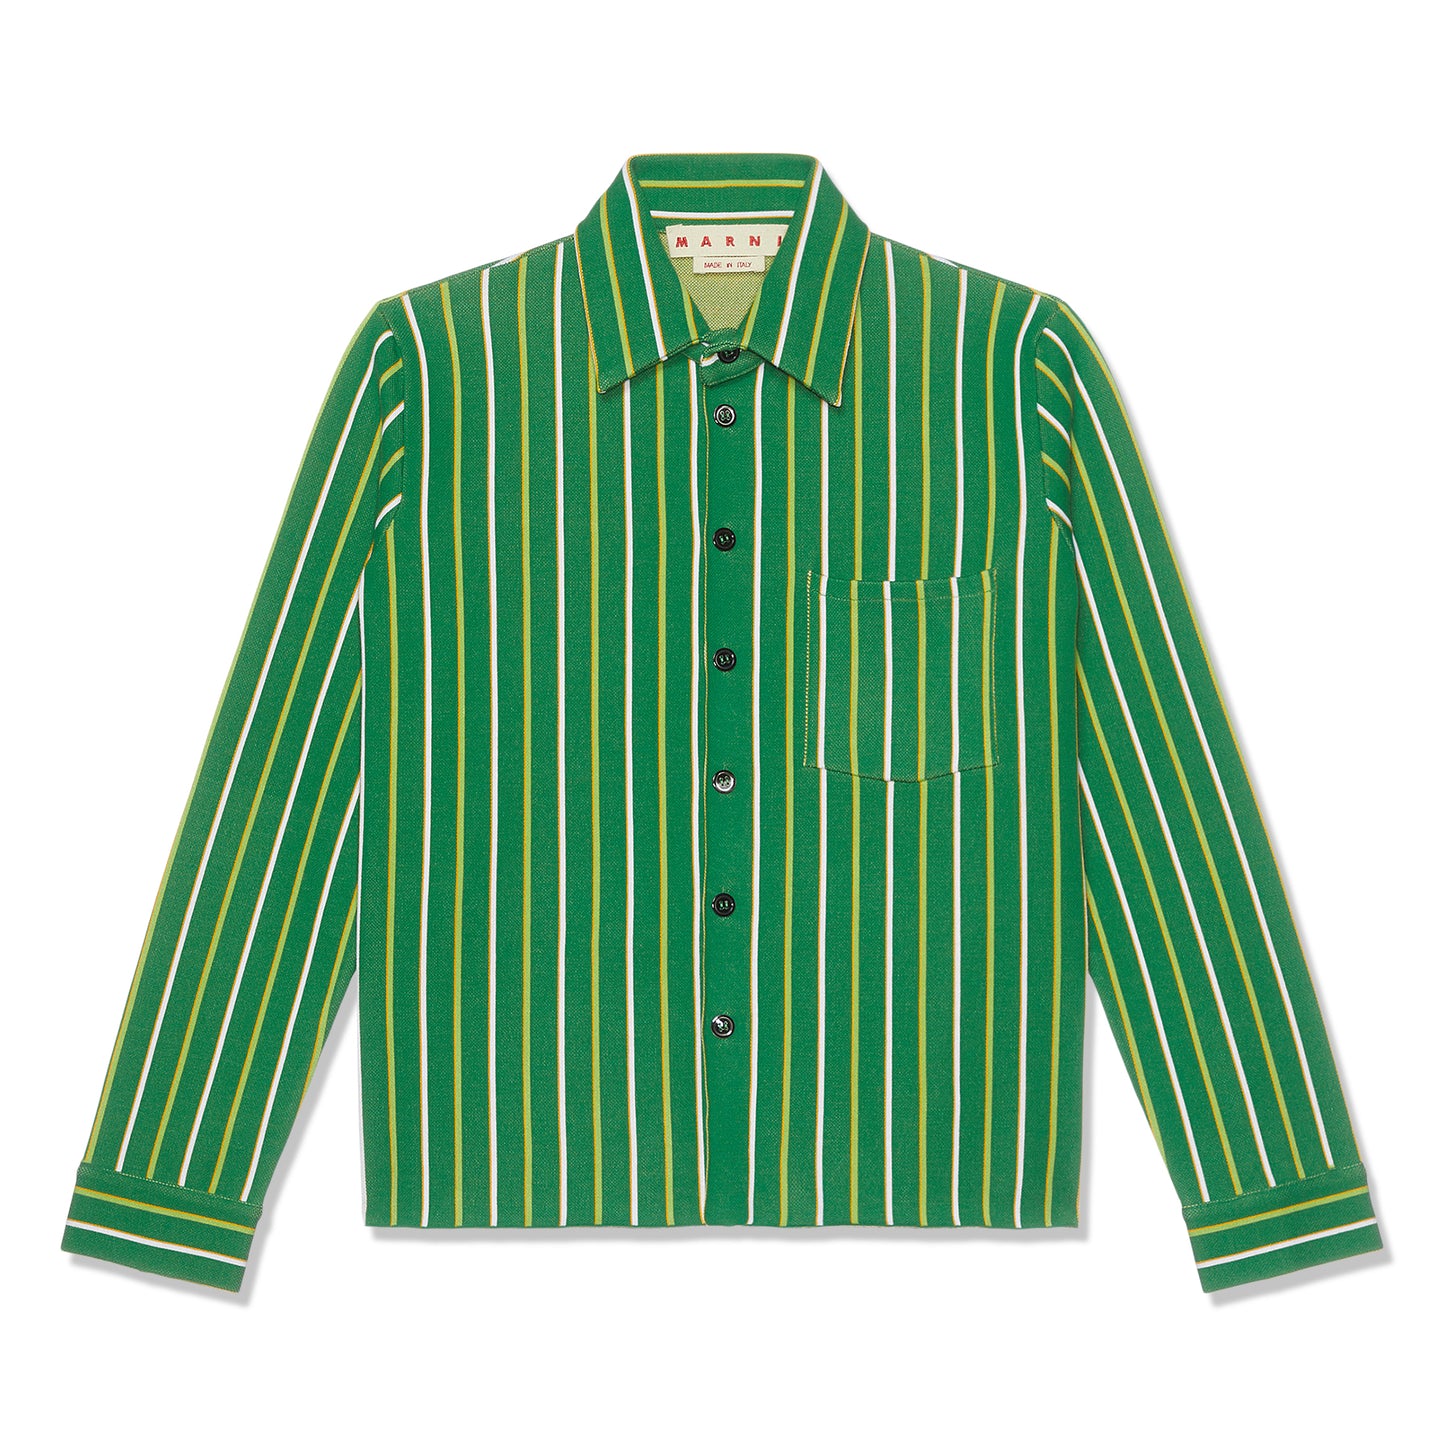 MARNI Striped Techno Knit Shirt (Sea Green)